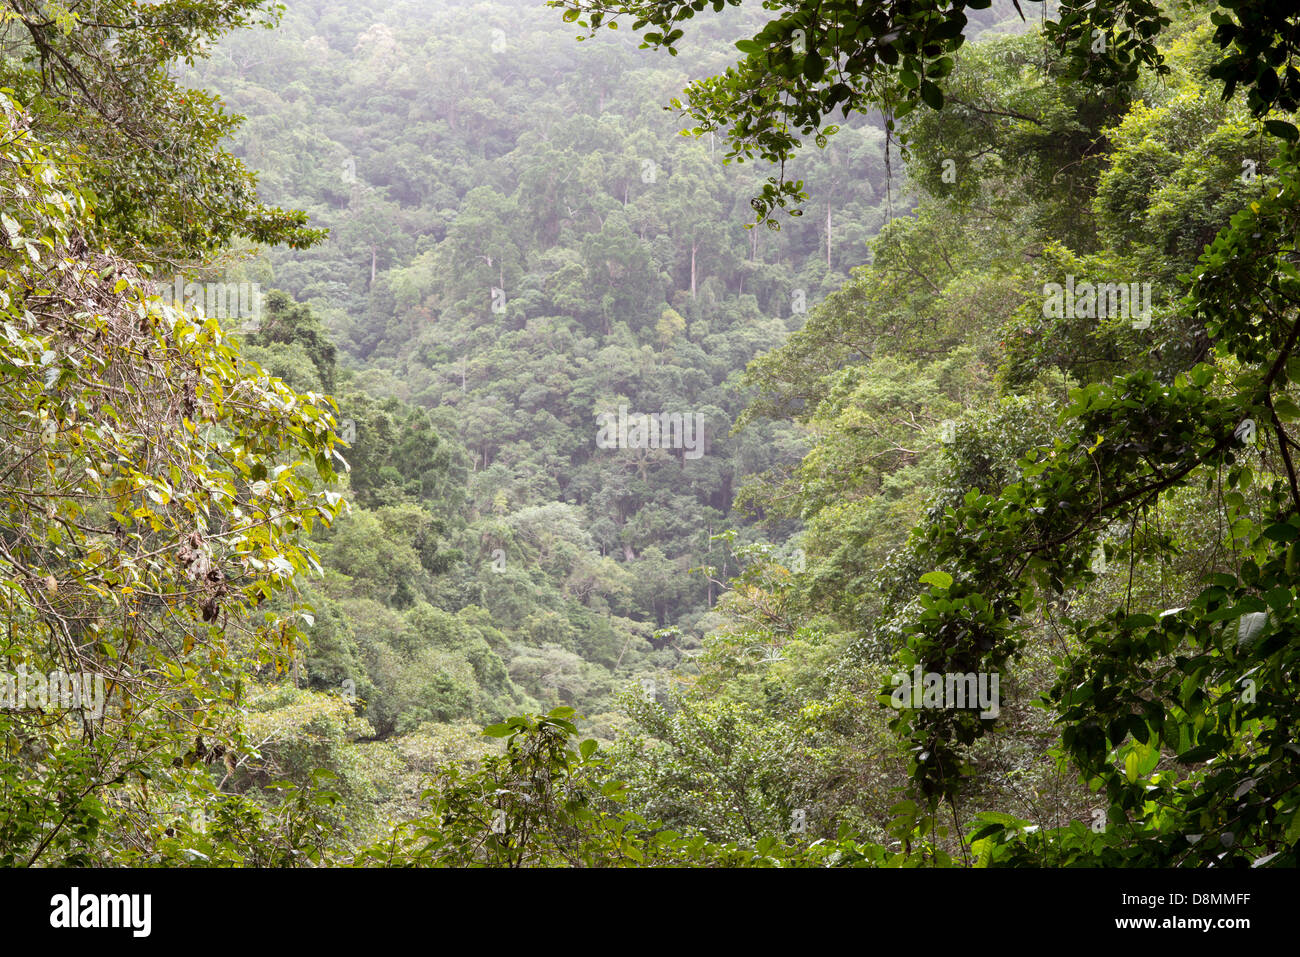 Rainforest at the Crystal Cascades near Cairns, Far North Queensland, Australia Stock Photo